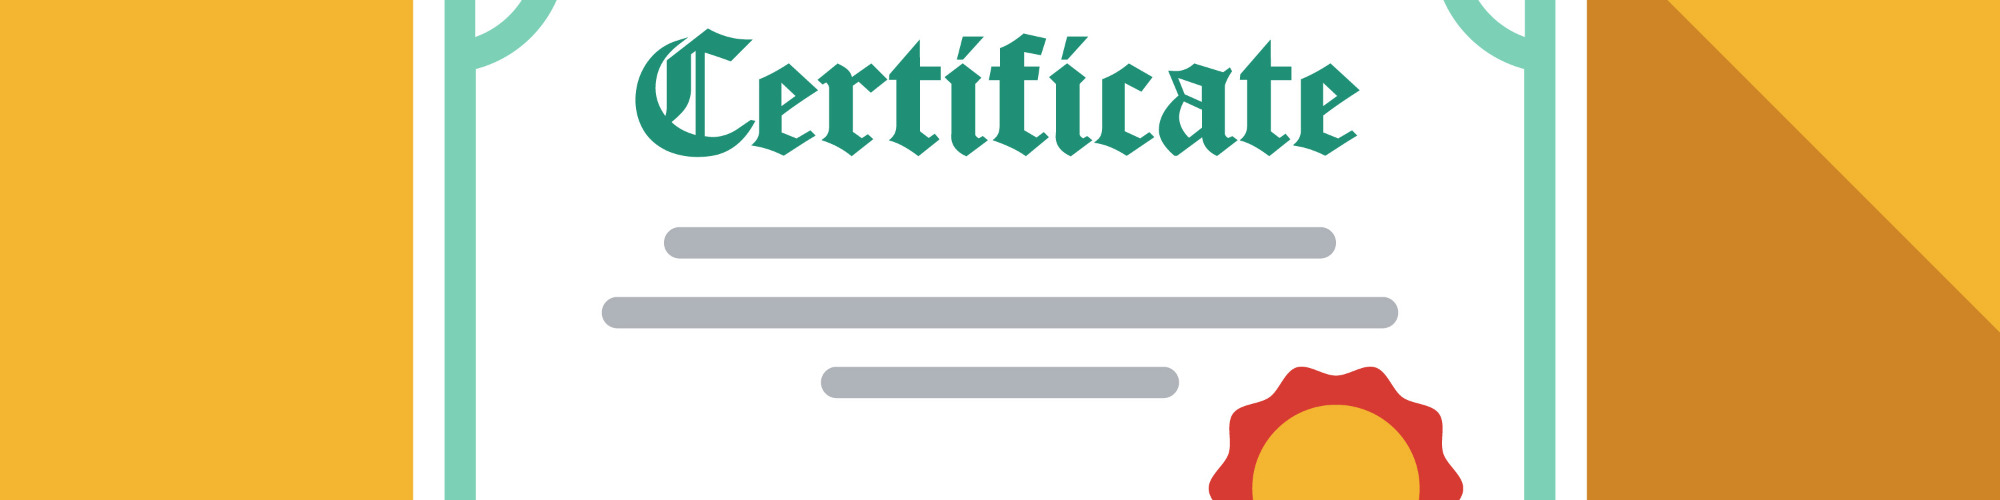 Certificate in Civil Litigation - Live at Your Desk